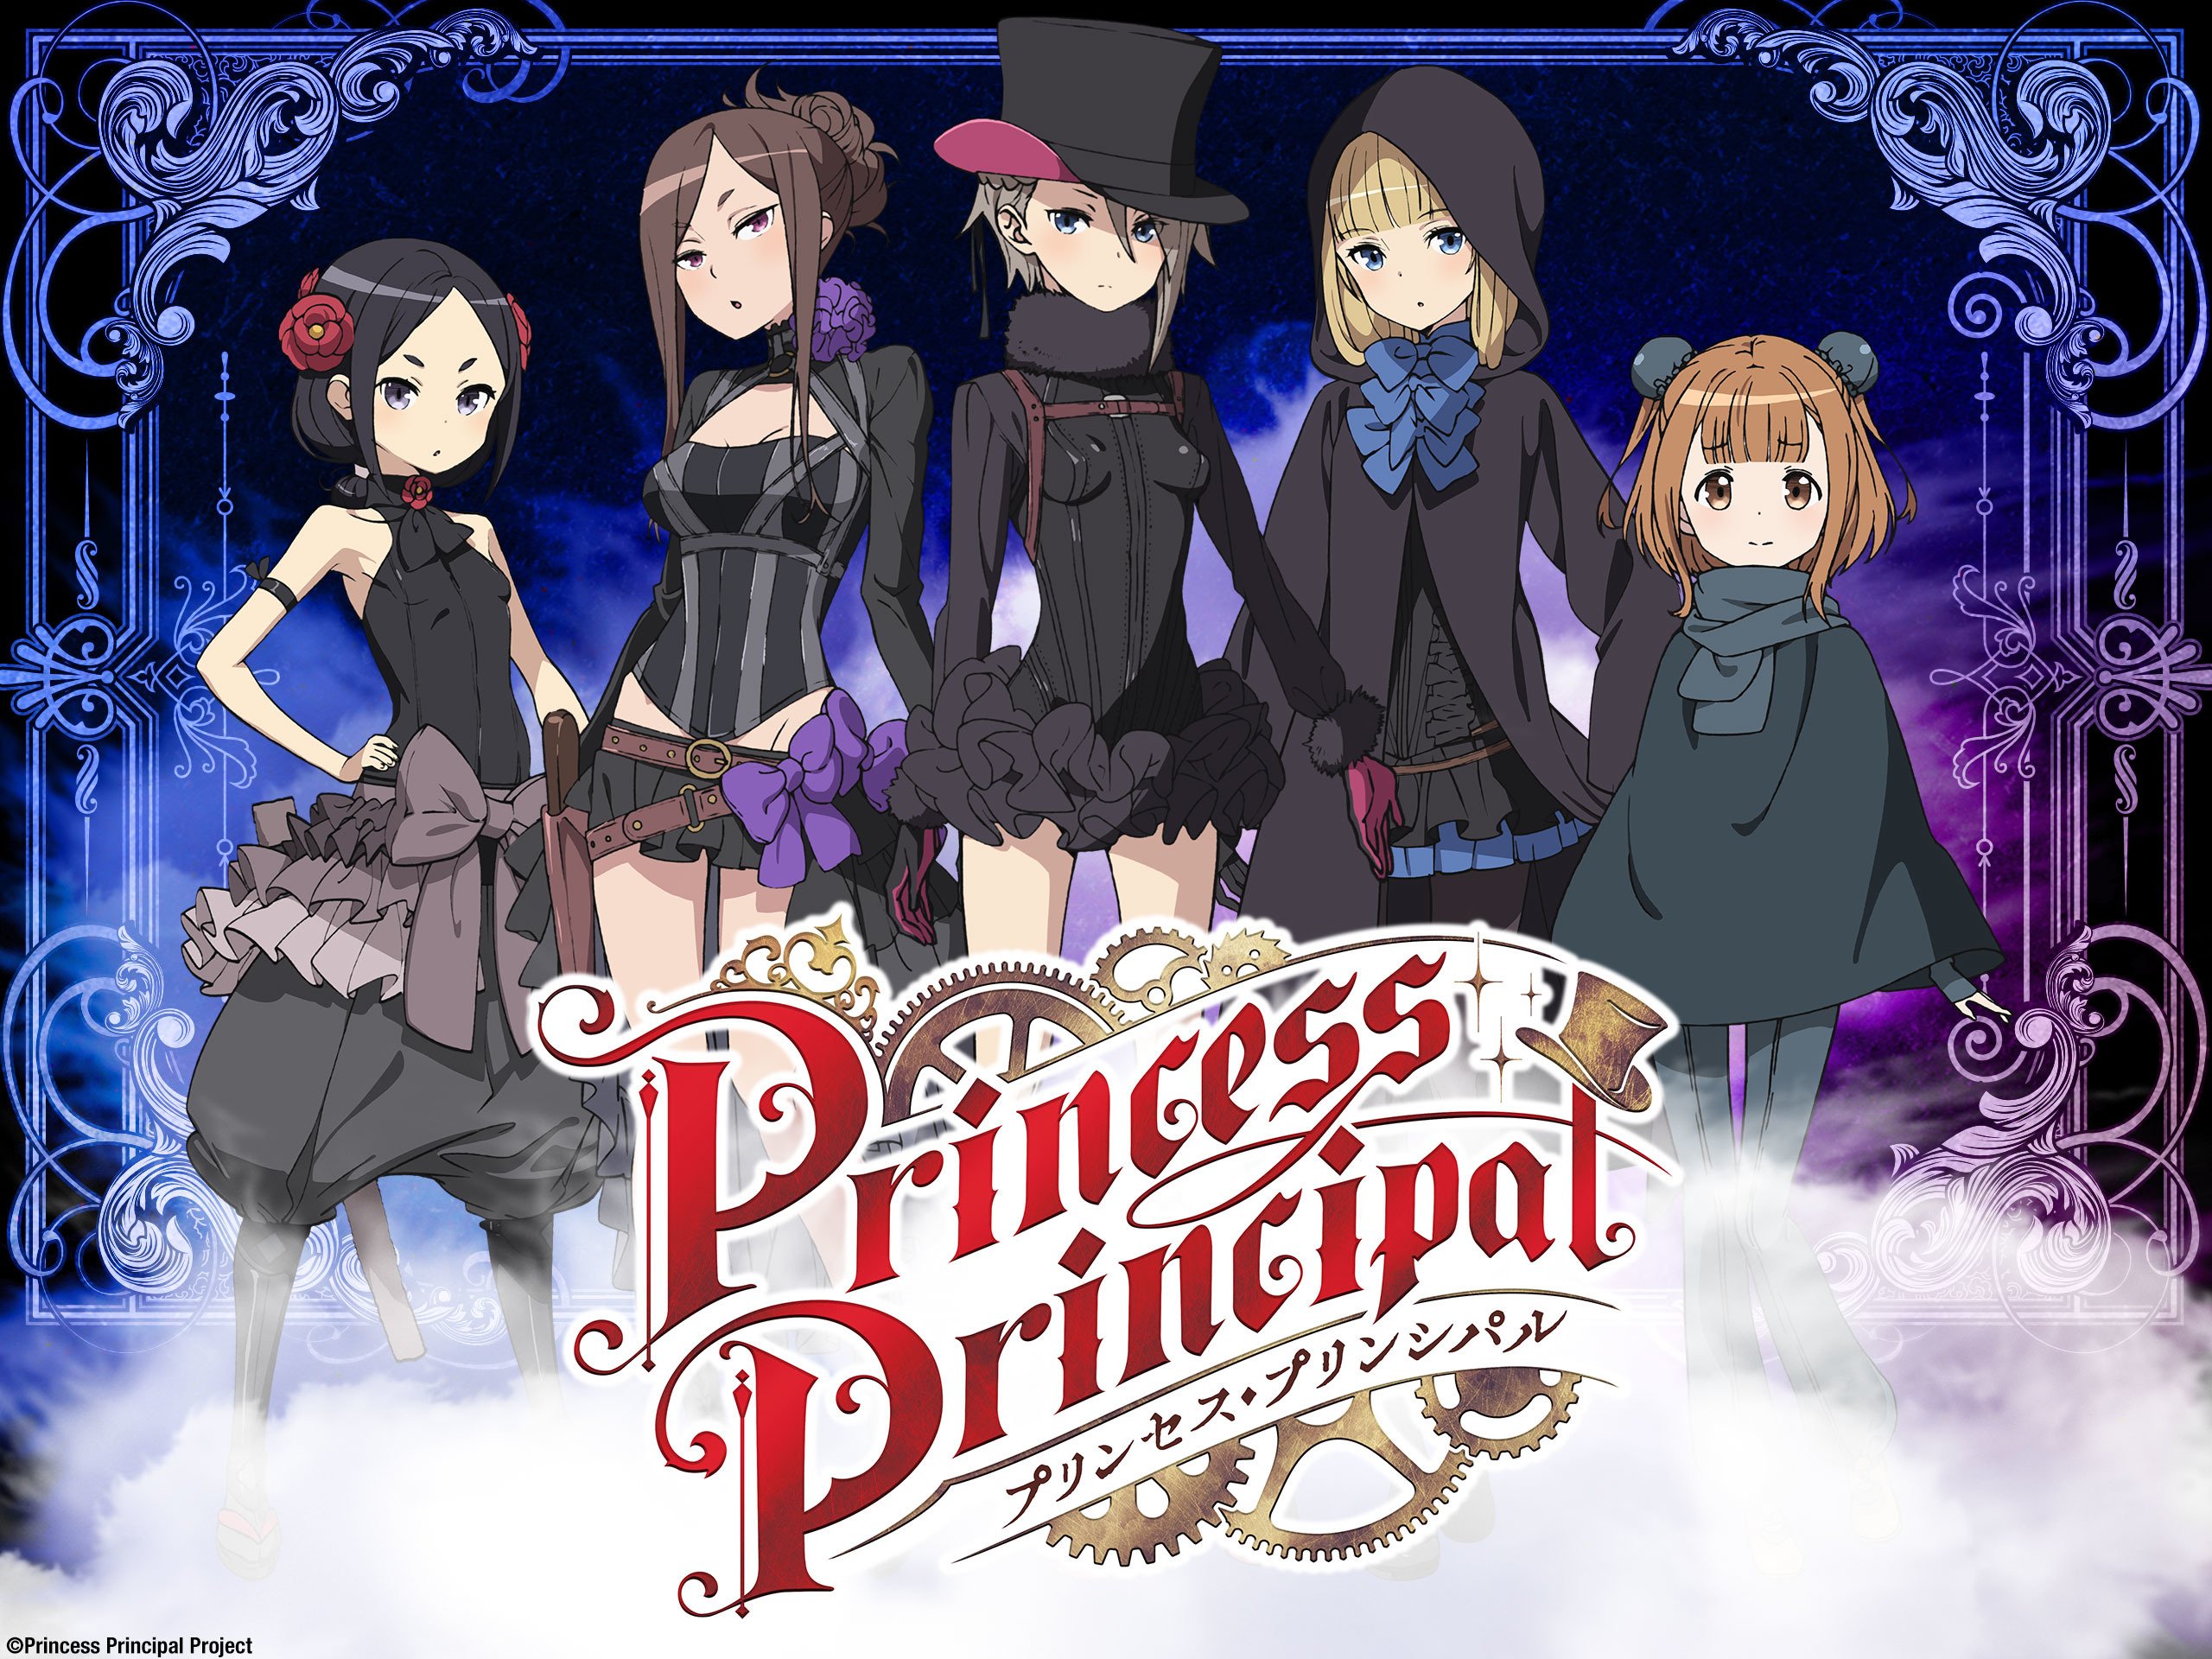 Princess Principal: Anime Review